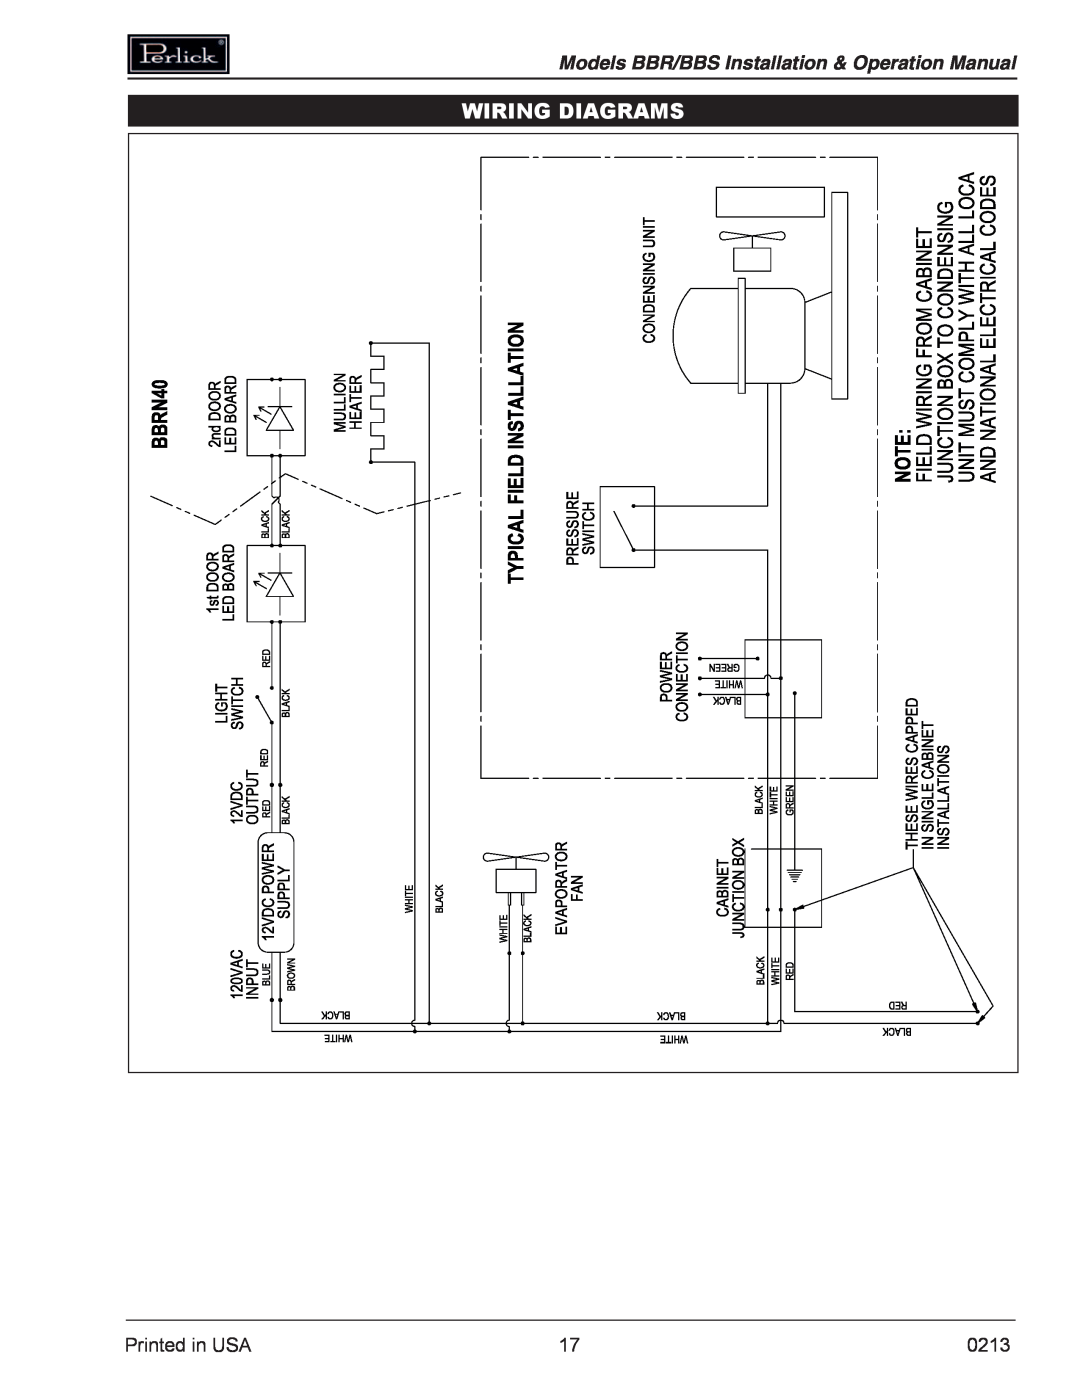 Perlick BBSN, BBRN operation manual Wiring Diagrams 